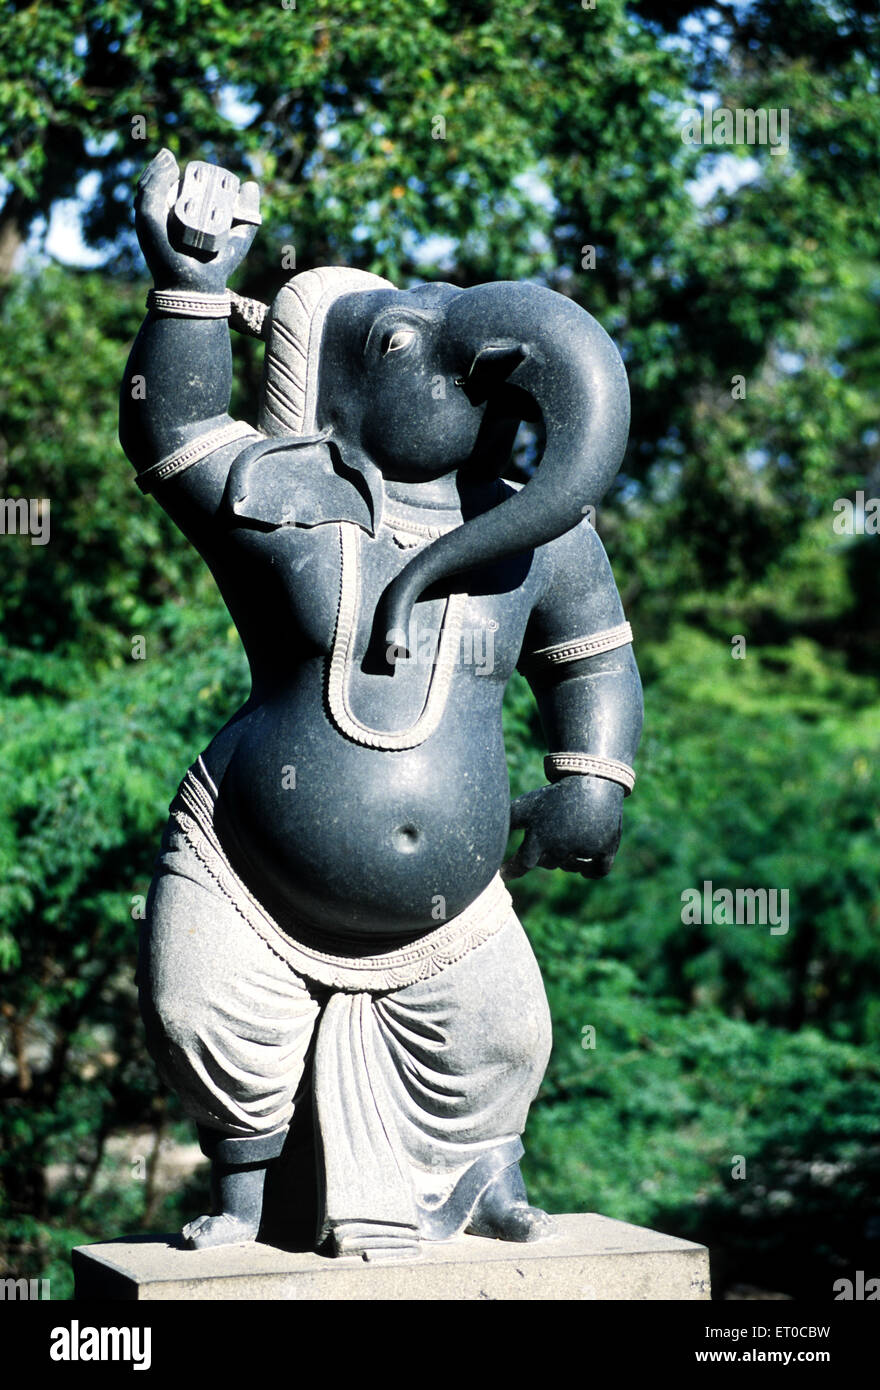 Sculpted ganesh elephant headed god at Mahabalipuram Mamallapuram ; Tamil Nadu ; India Stock Photo